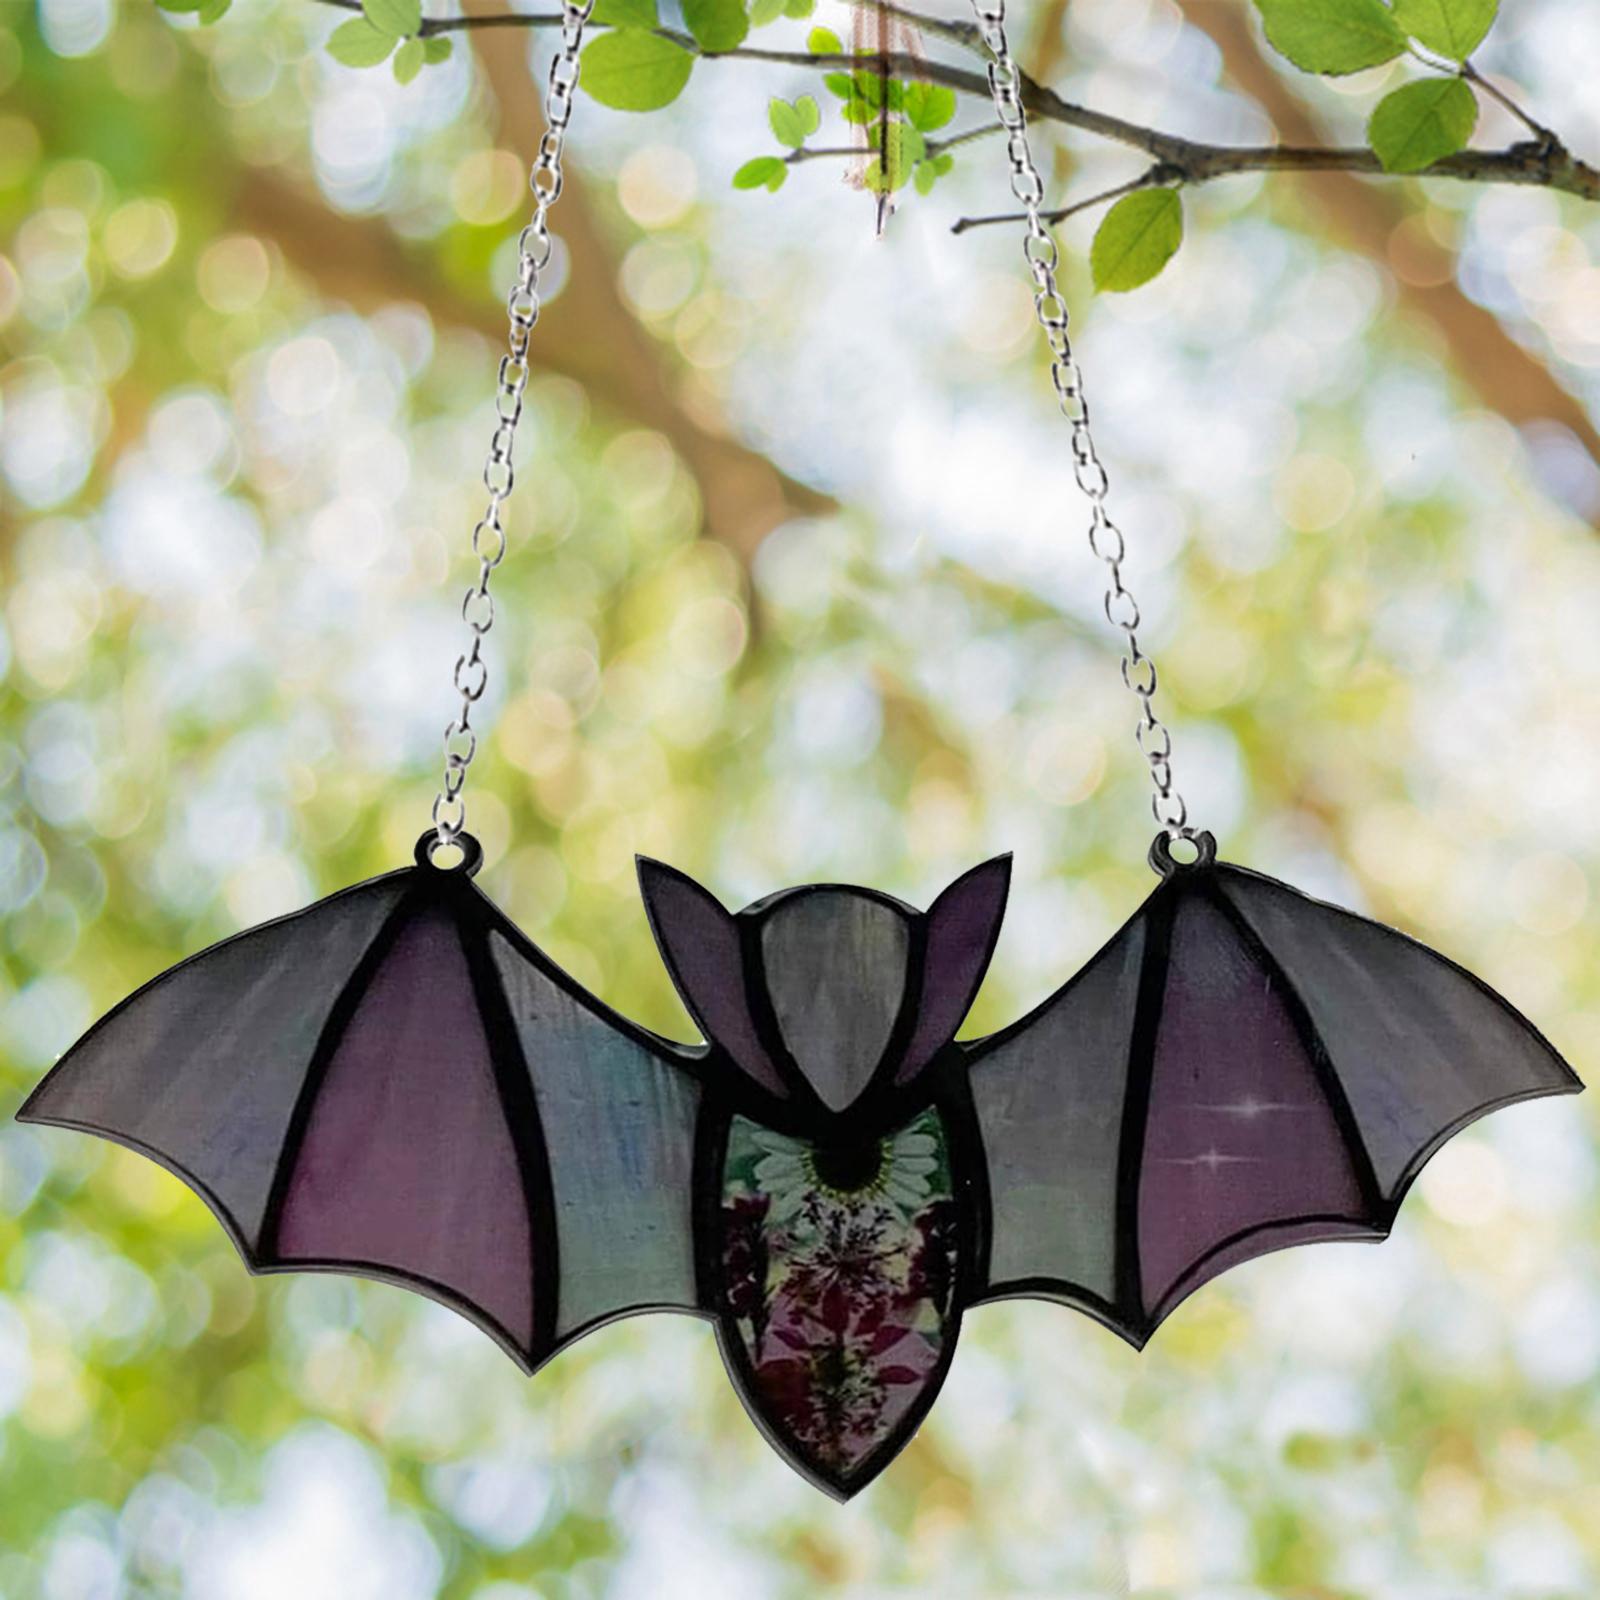 Hanging Bat Decoration Hanging Ornament Pendant for Garden Patio Home Decor 12cmx6.5cm Colorful